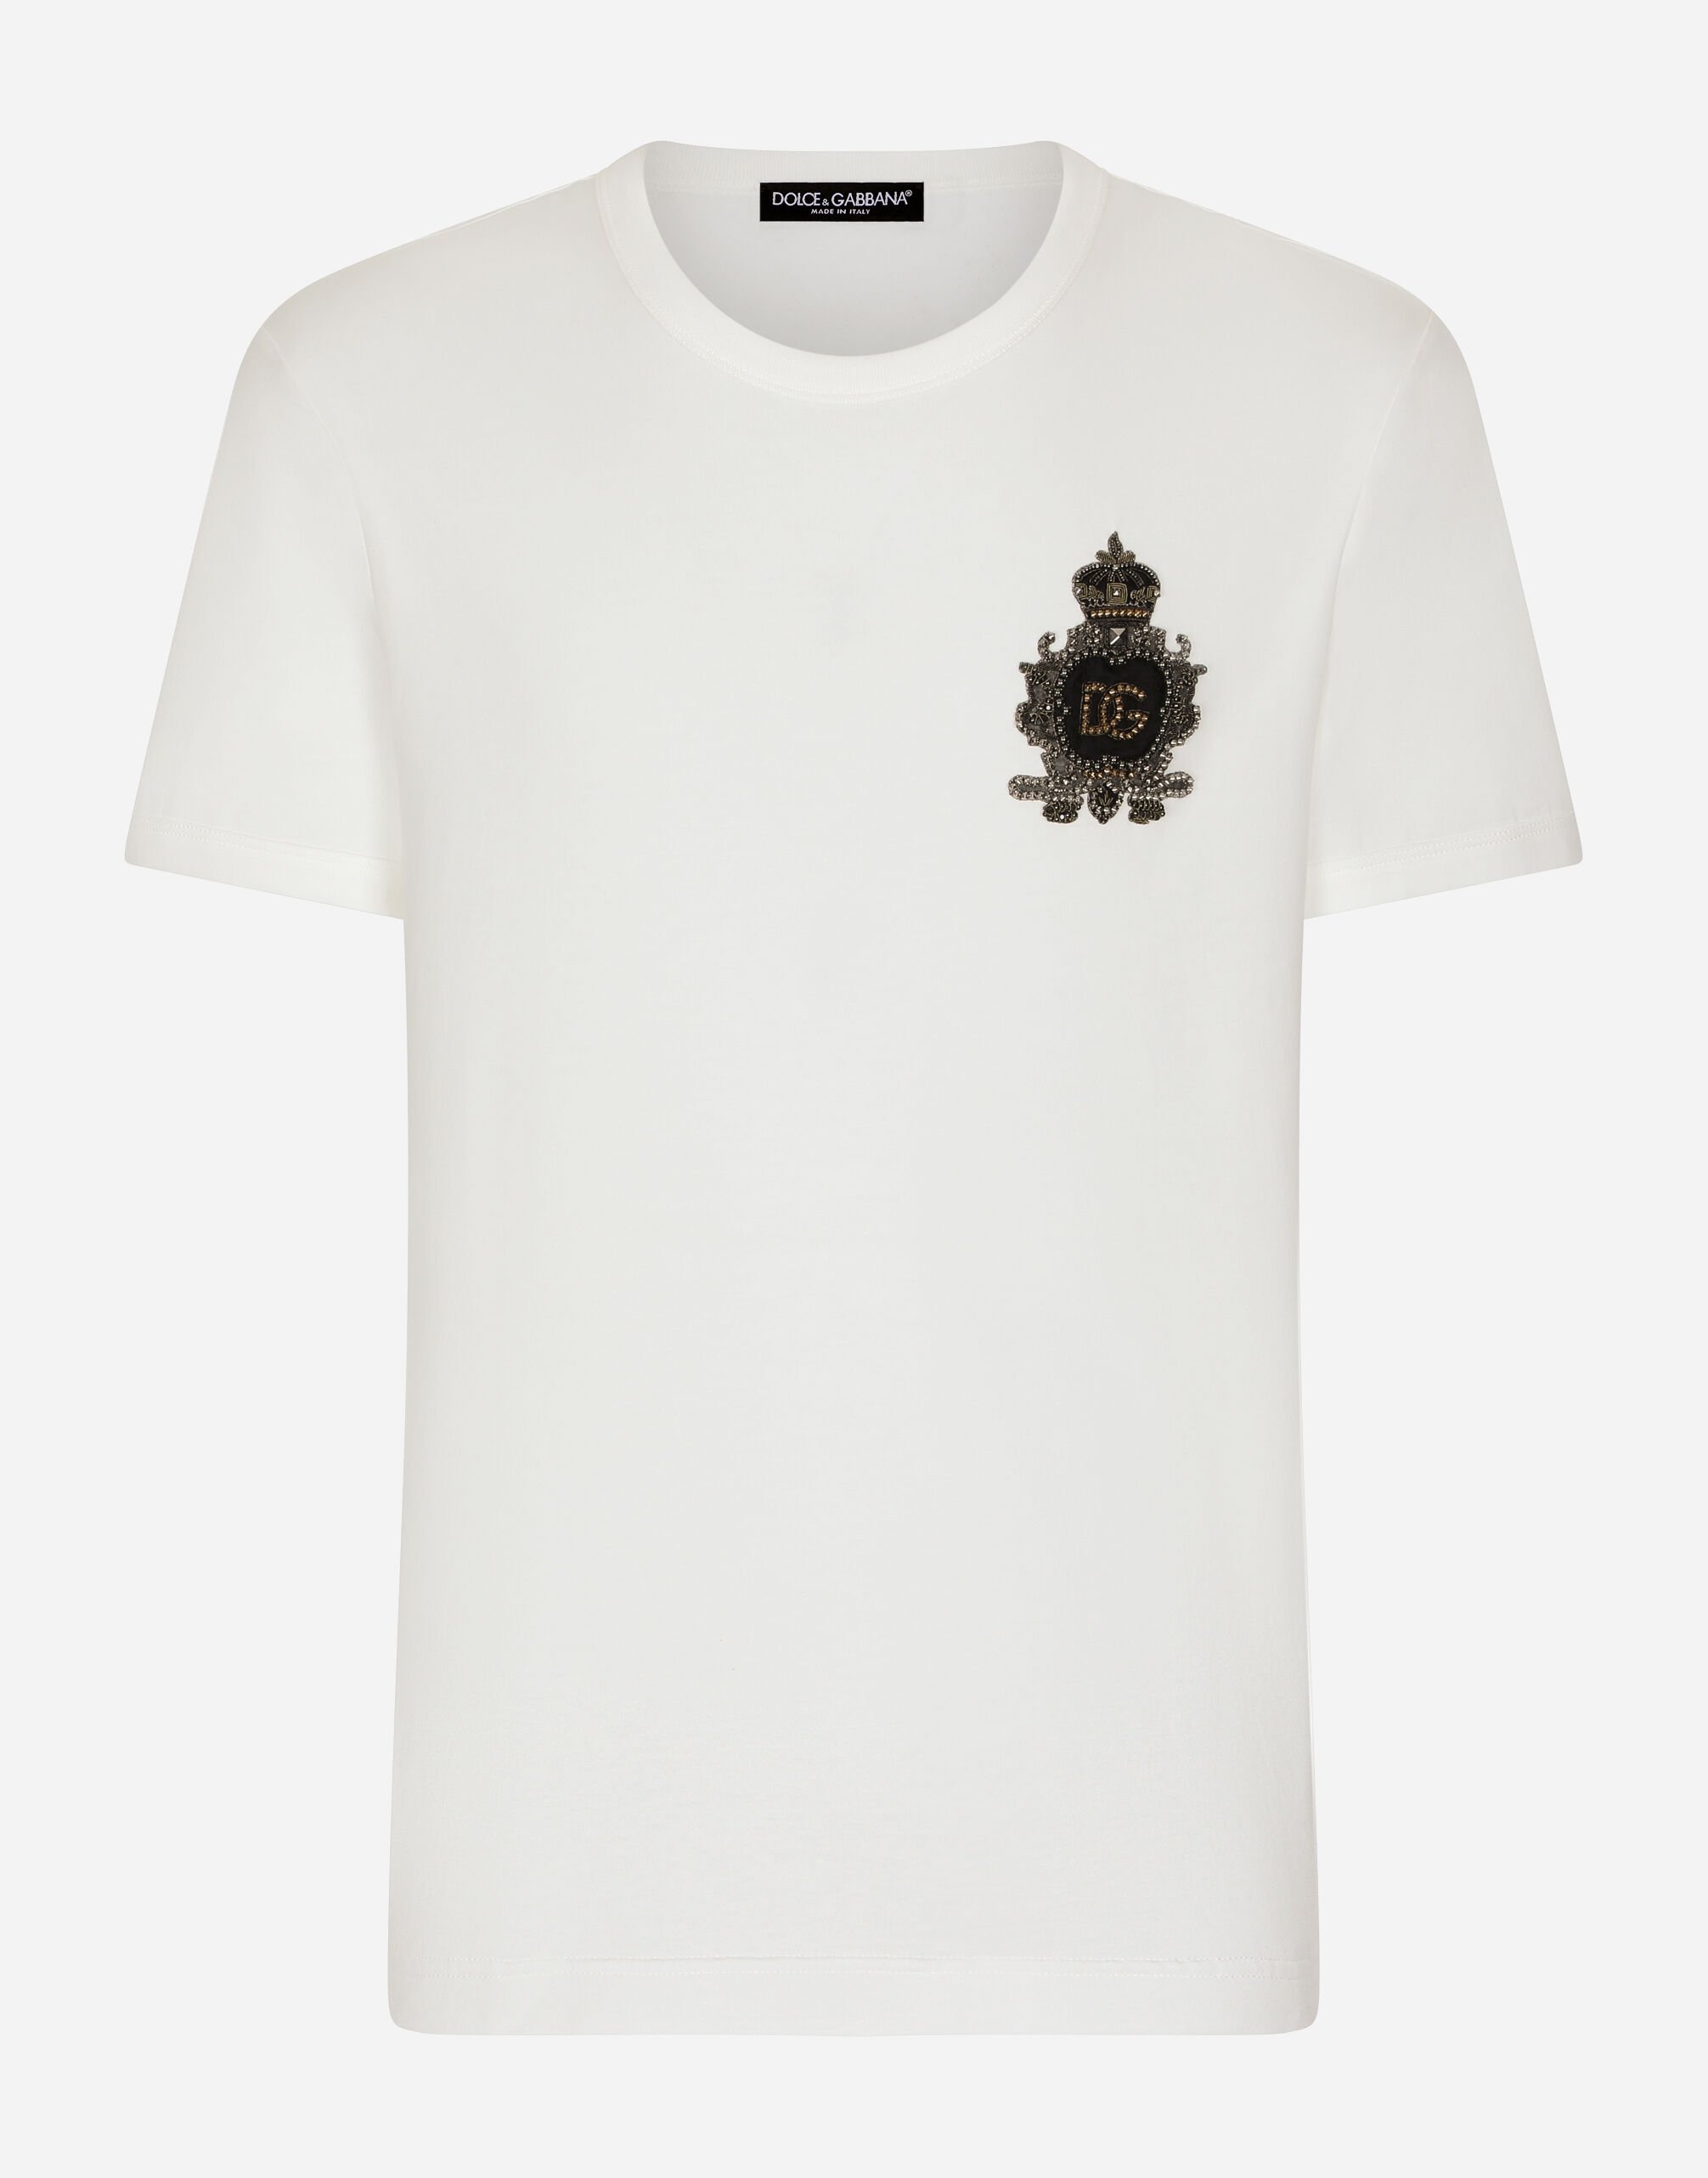 ${brand} Cotton T-shirt with heraldic DG logo patch ${colorDescription} ${masterID}